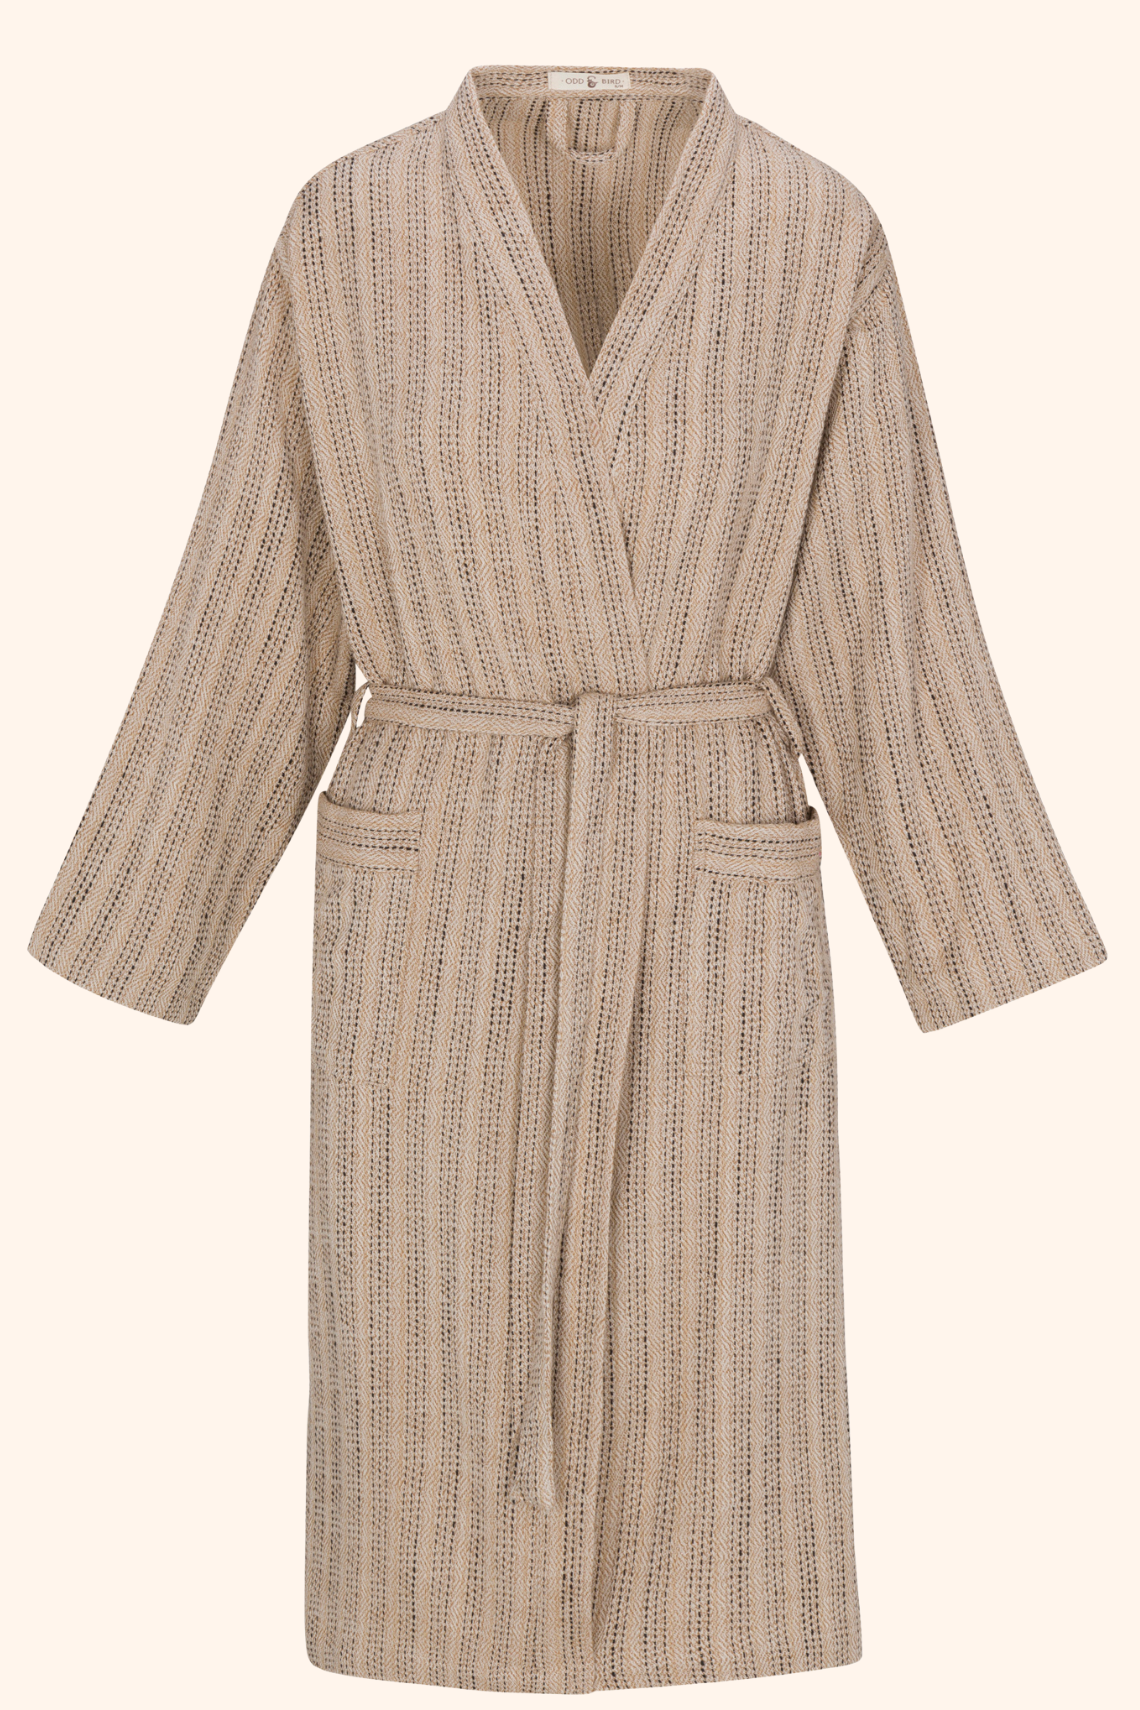 Gelin Robe | Coffee | Creamy Unisex OddBird Sustainably Cotton/Linen Handwoven Turkish – Luxury Made in Robe